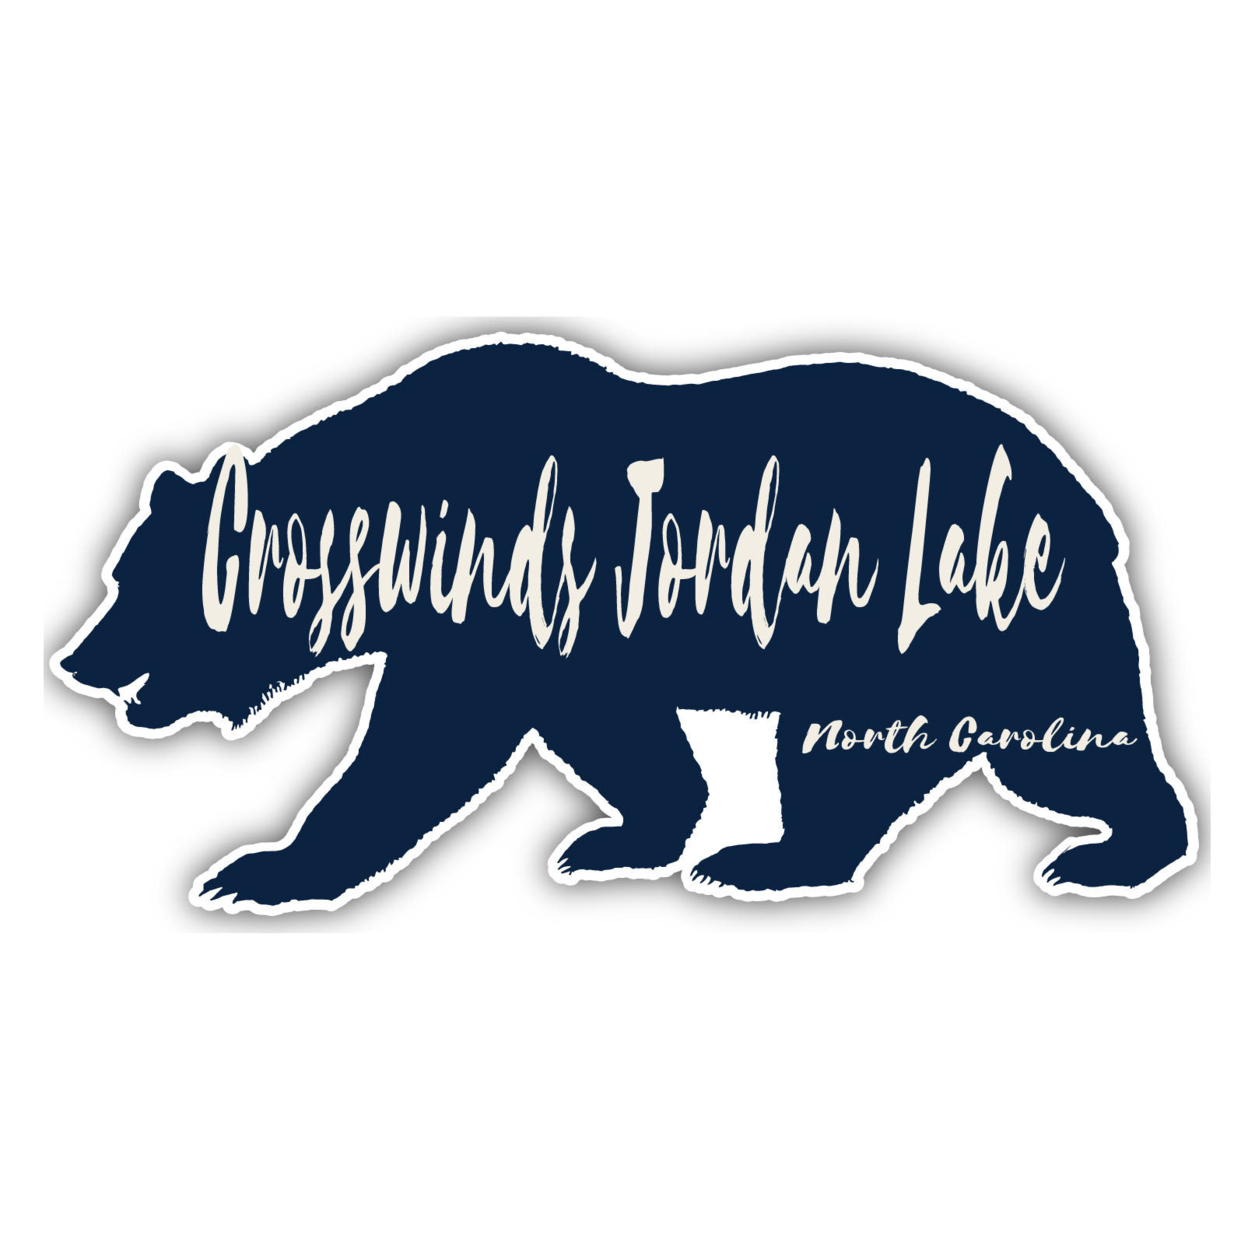 Crosswinds Jordan Lake North Carolina Souvenir Decorative Stickers (Choose Theme And Size) - 4-Pack, 8-Inch, Bear